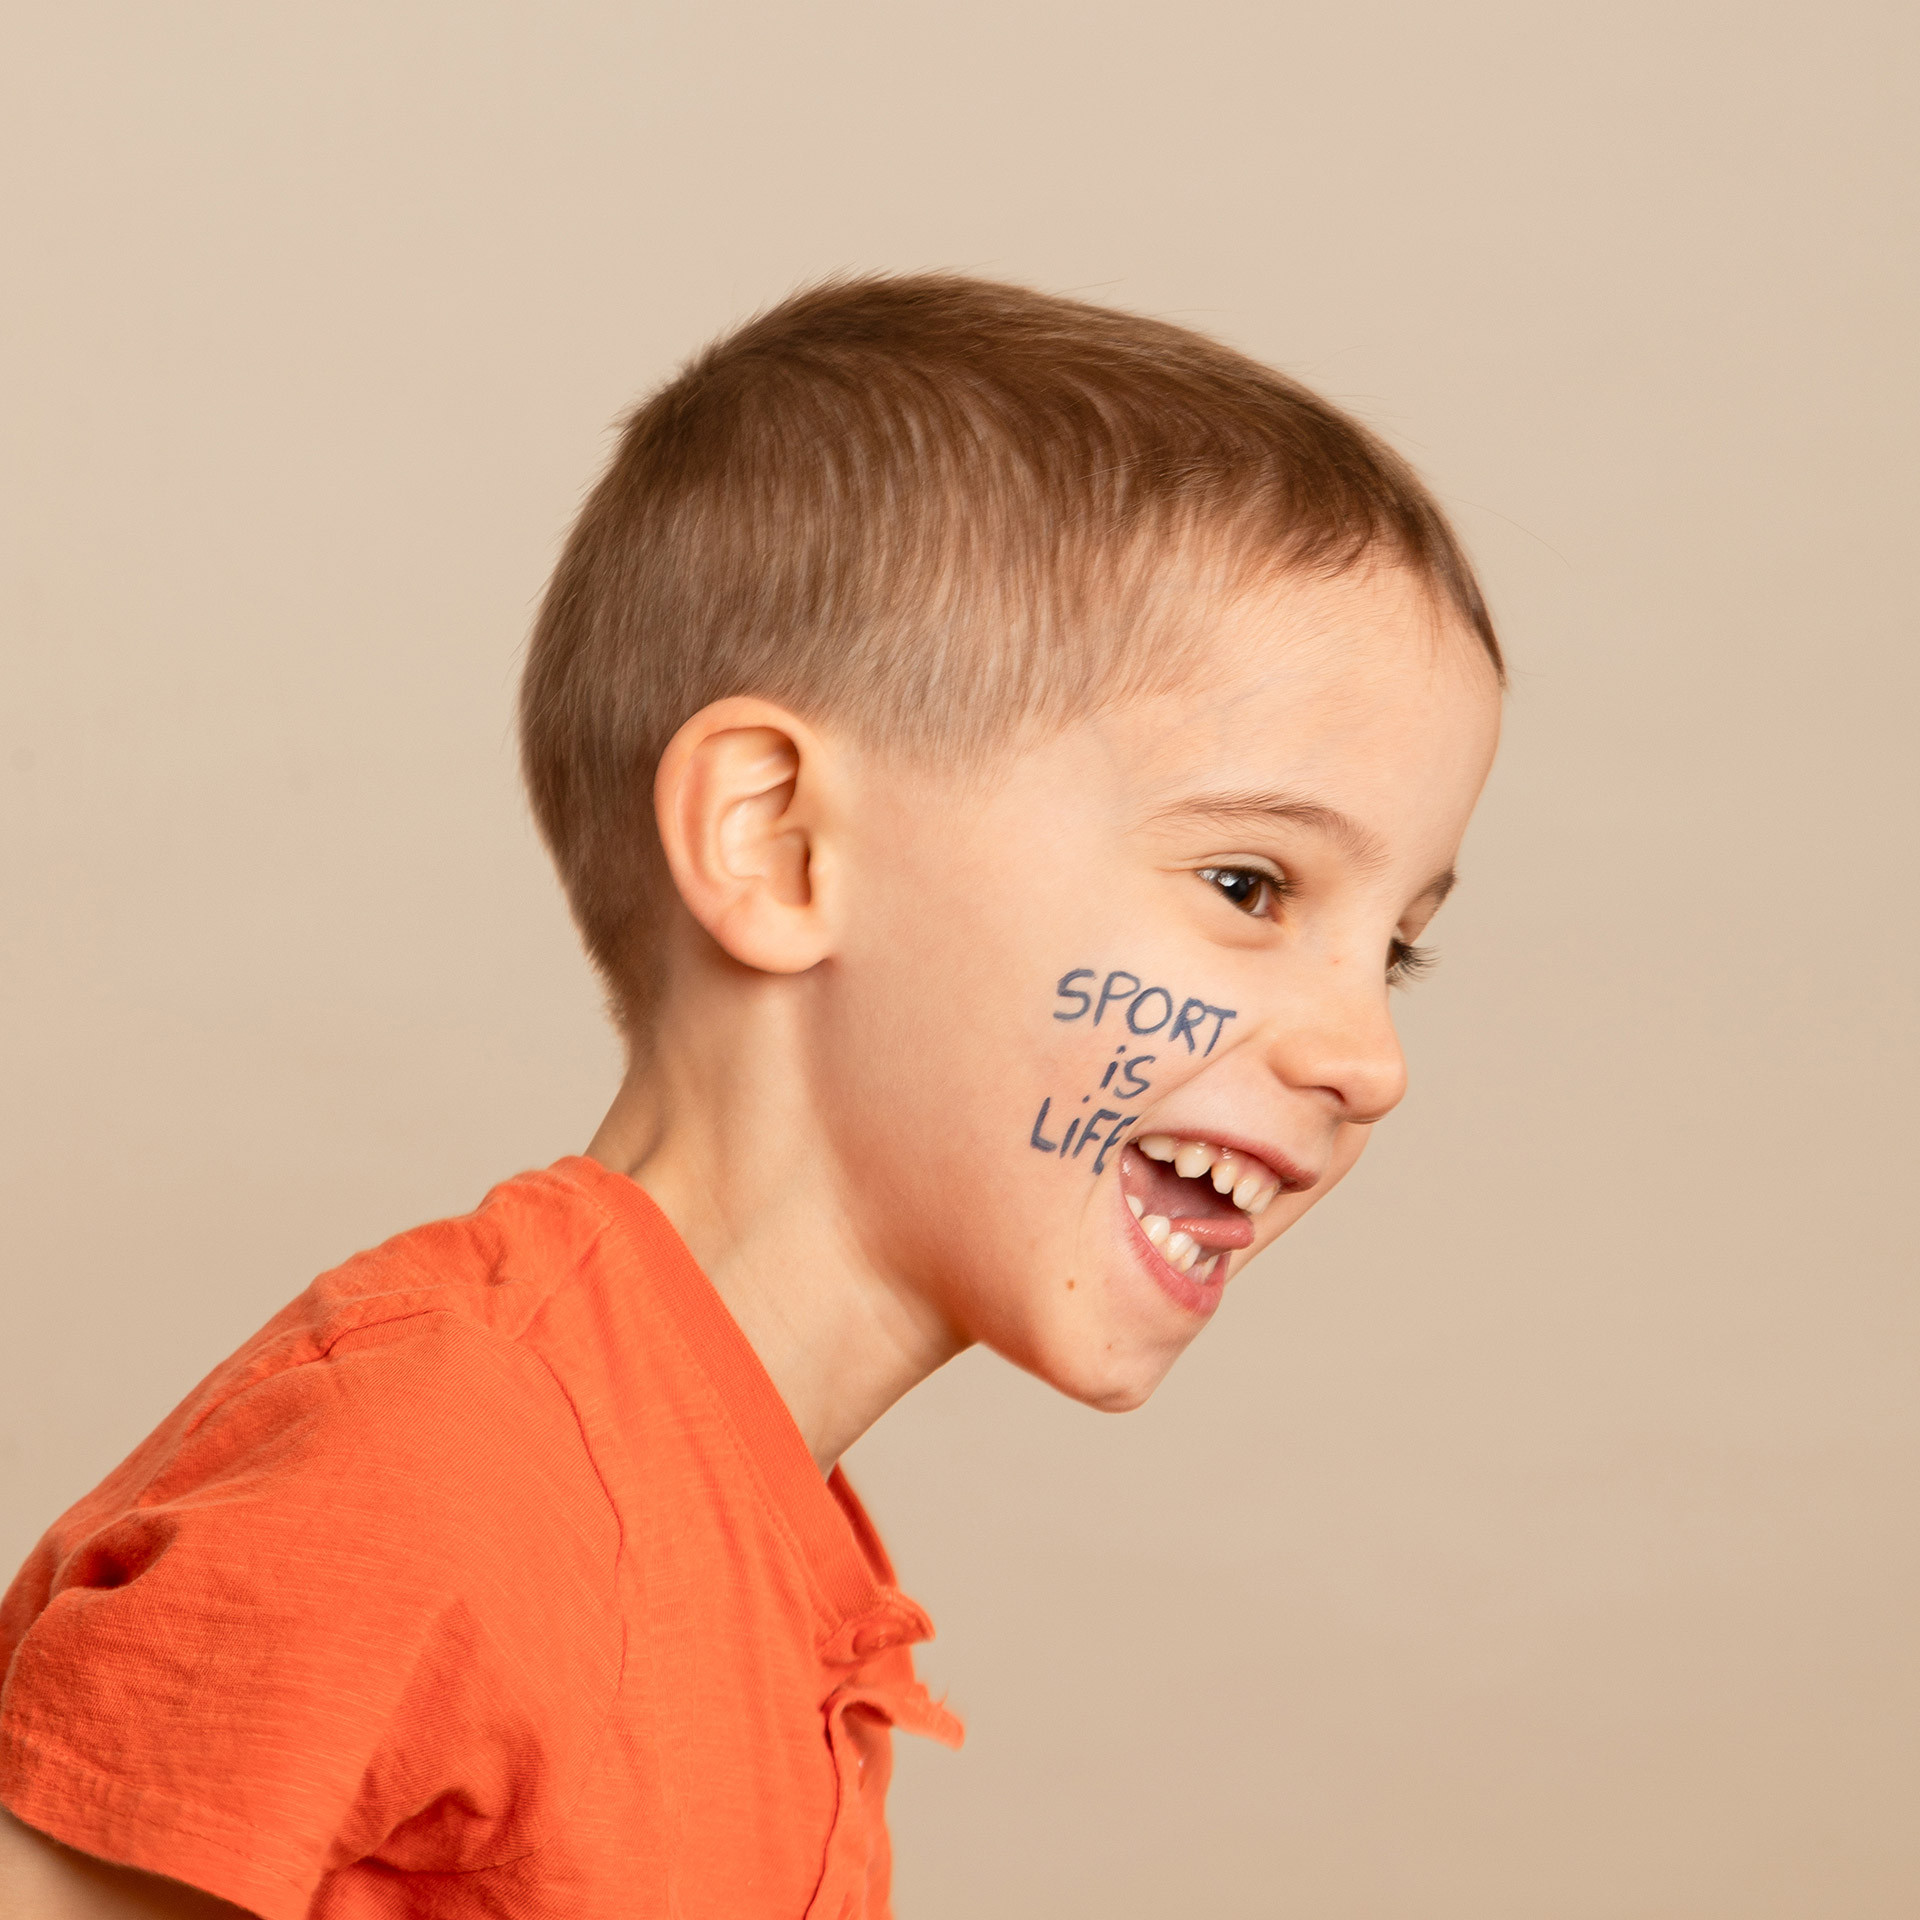 Enfant avec maquillage bleu blanc rouge du kit supporter tattoopen